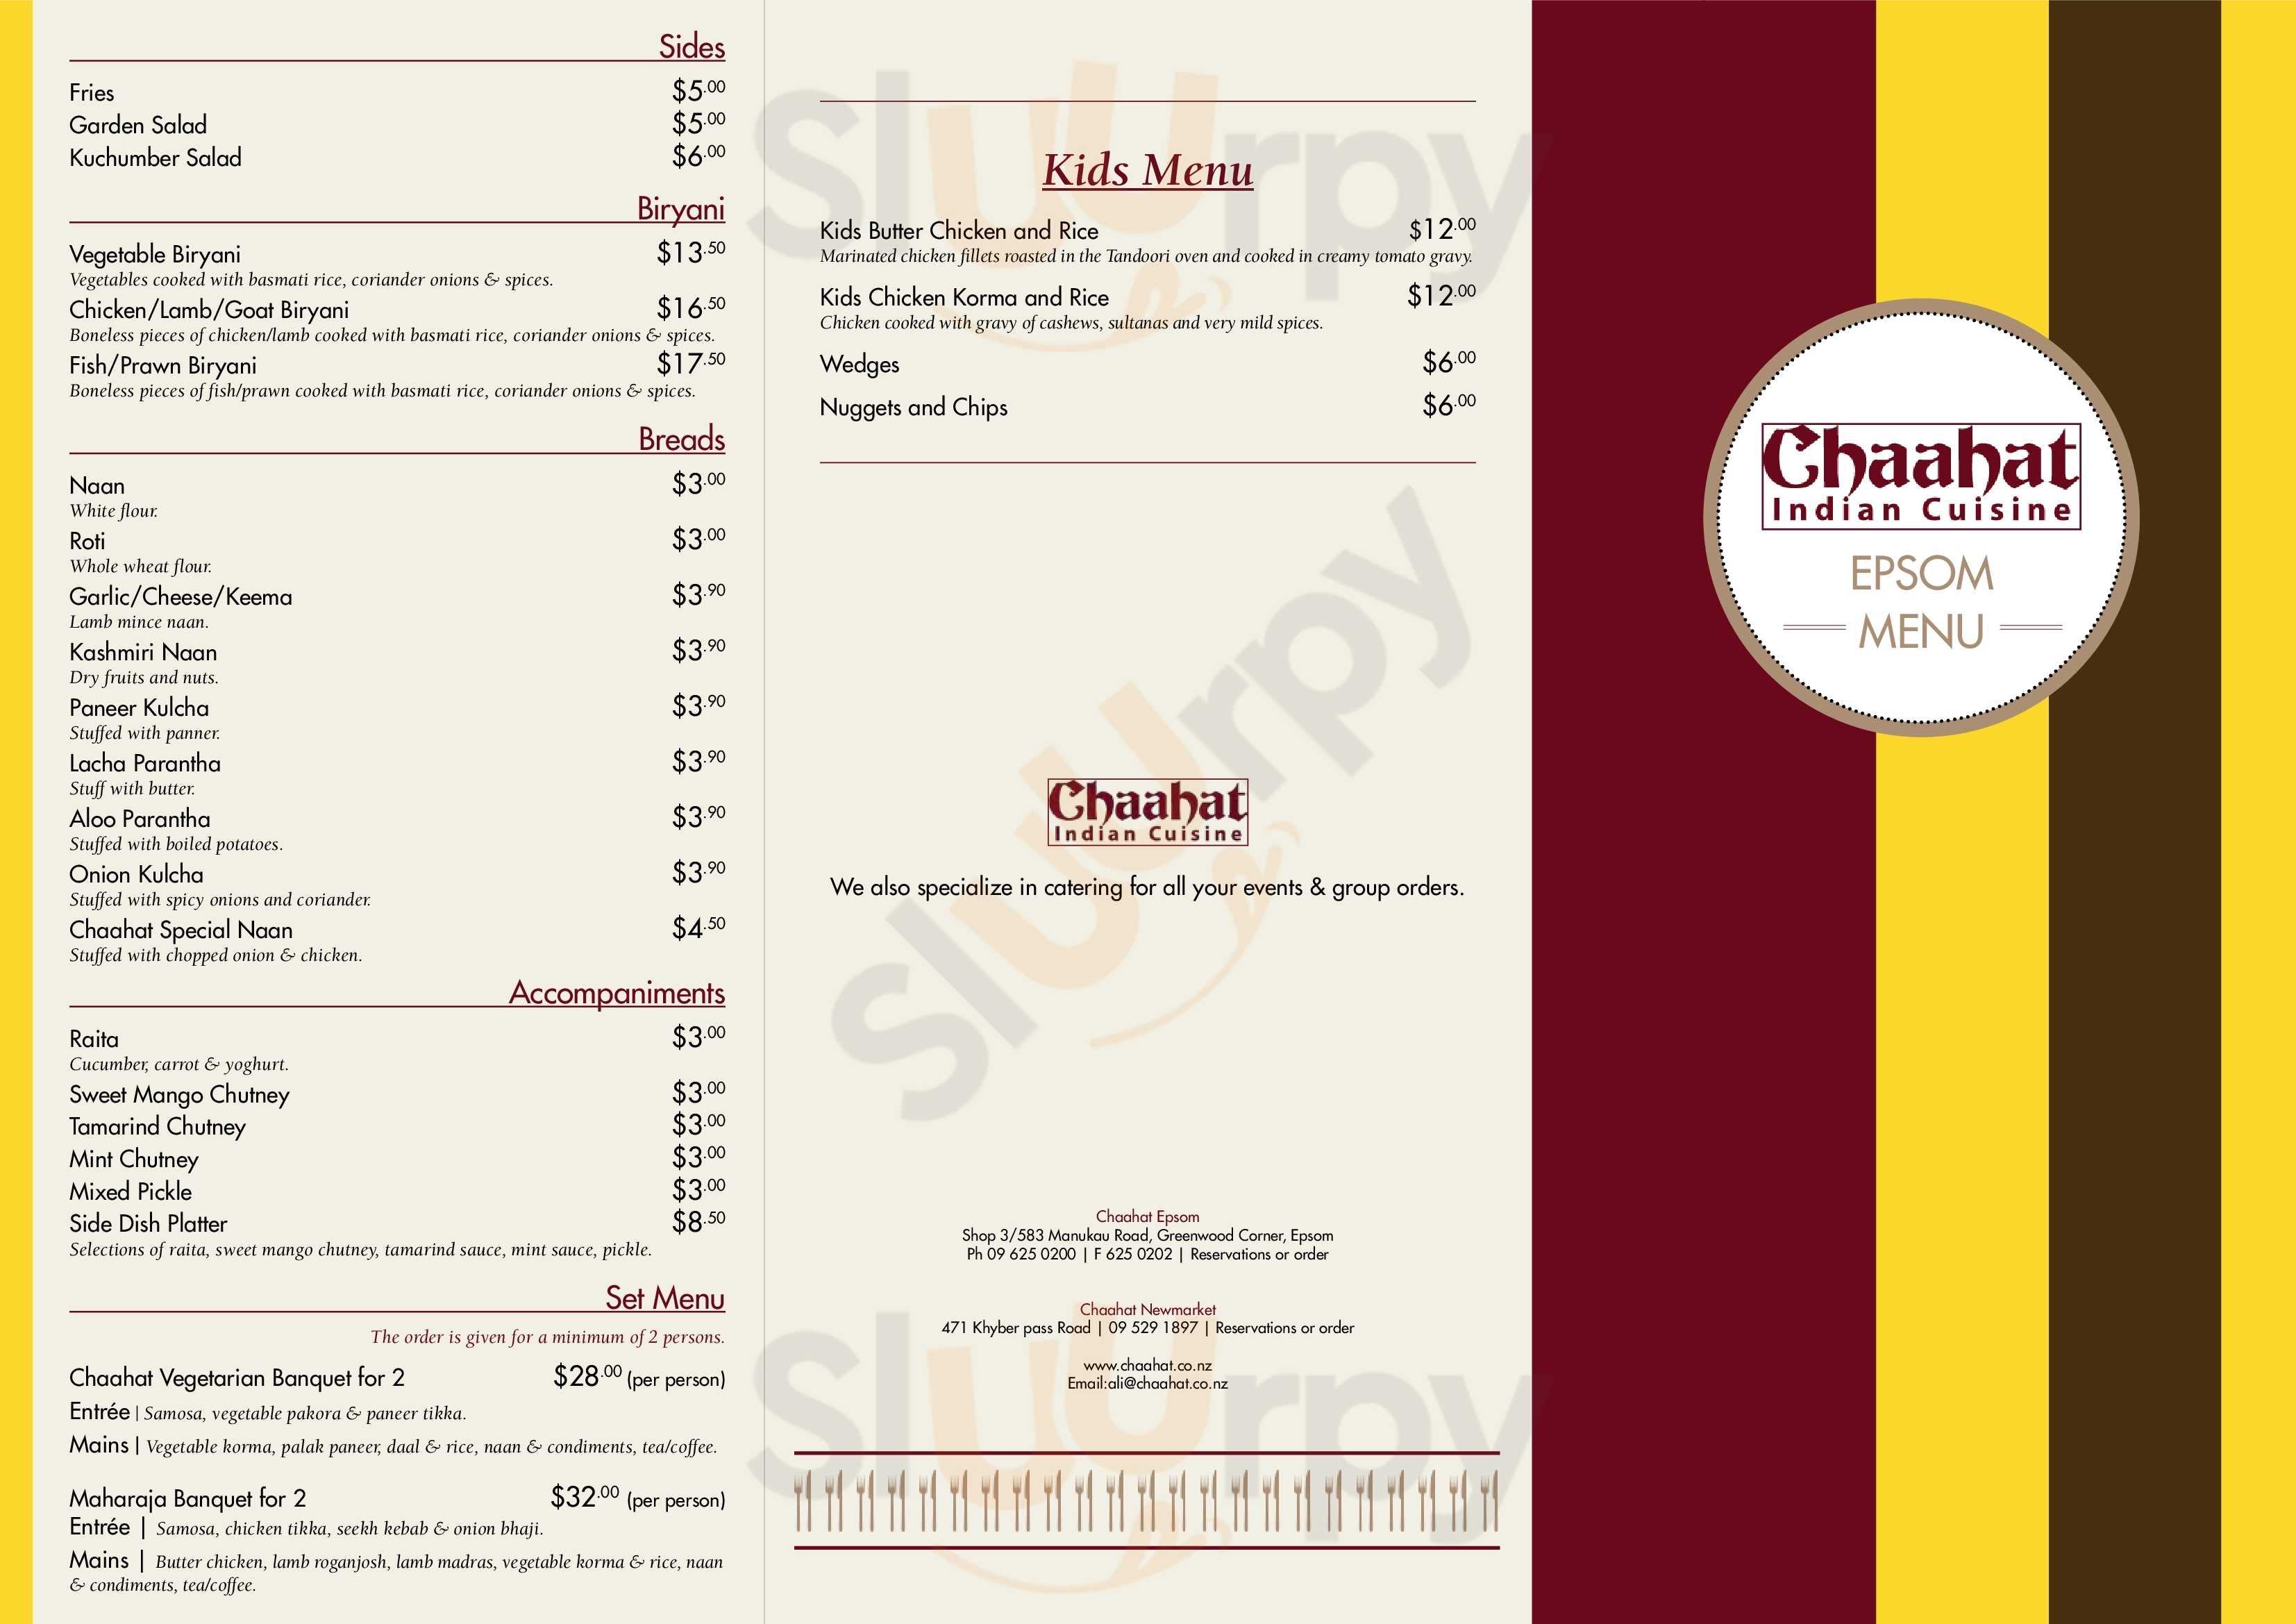 Chaahat Indian Cuisine Epsom Menu - 1